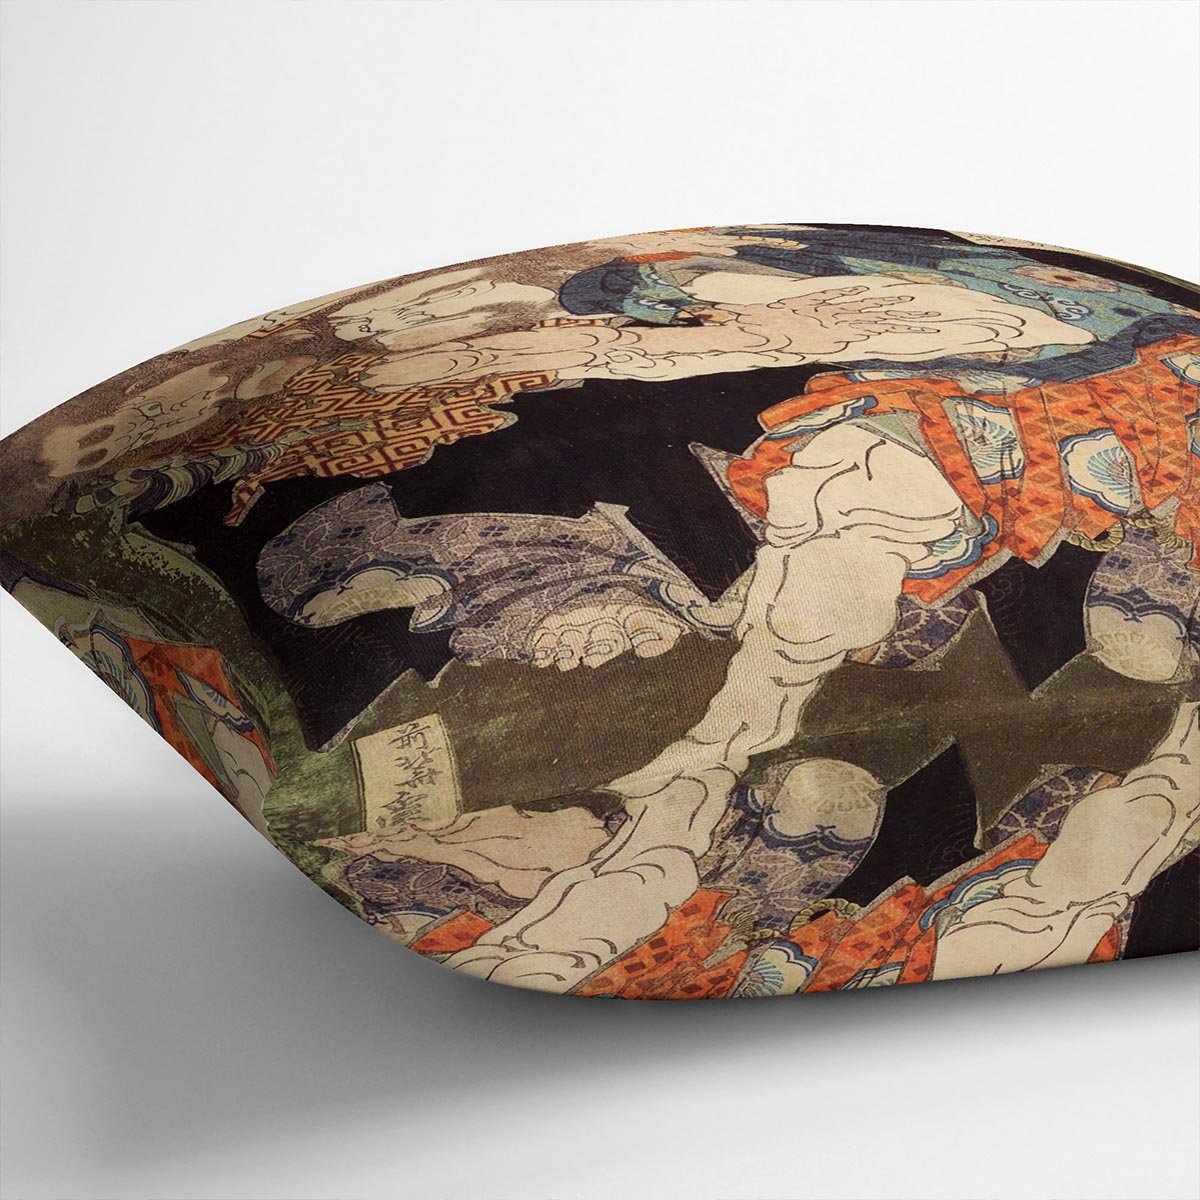 Sumo wrestlers by Hokusai Throw Pillow